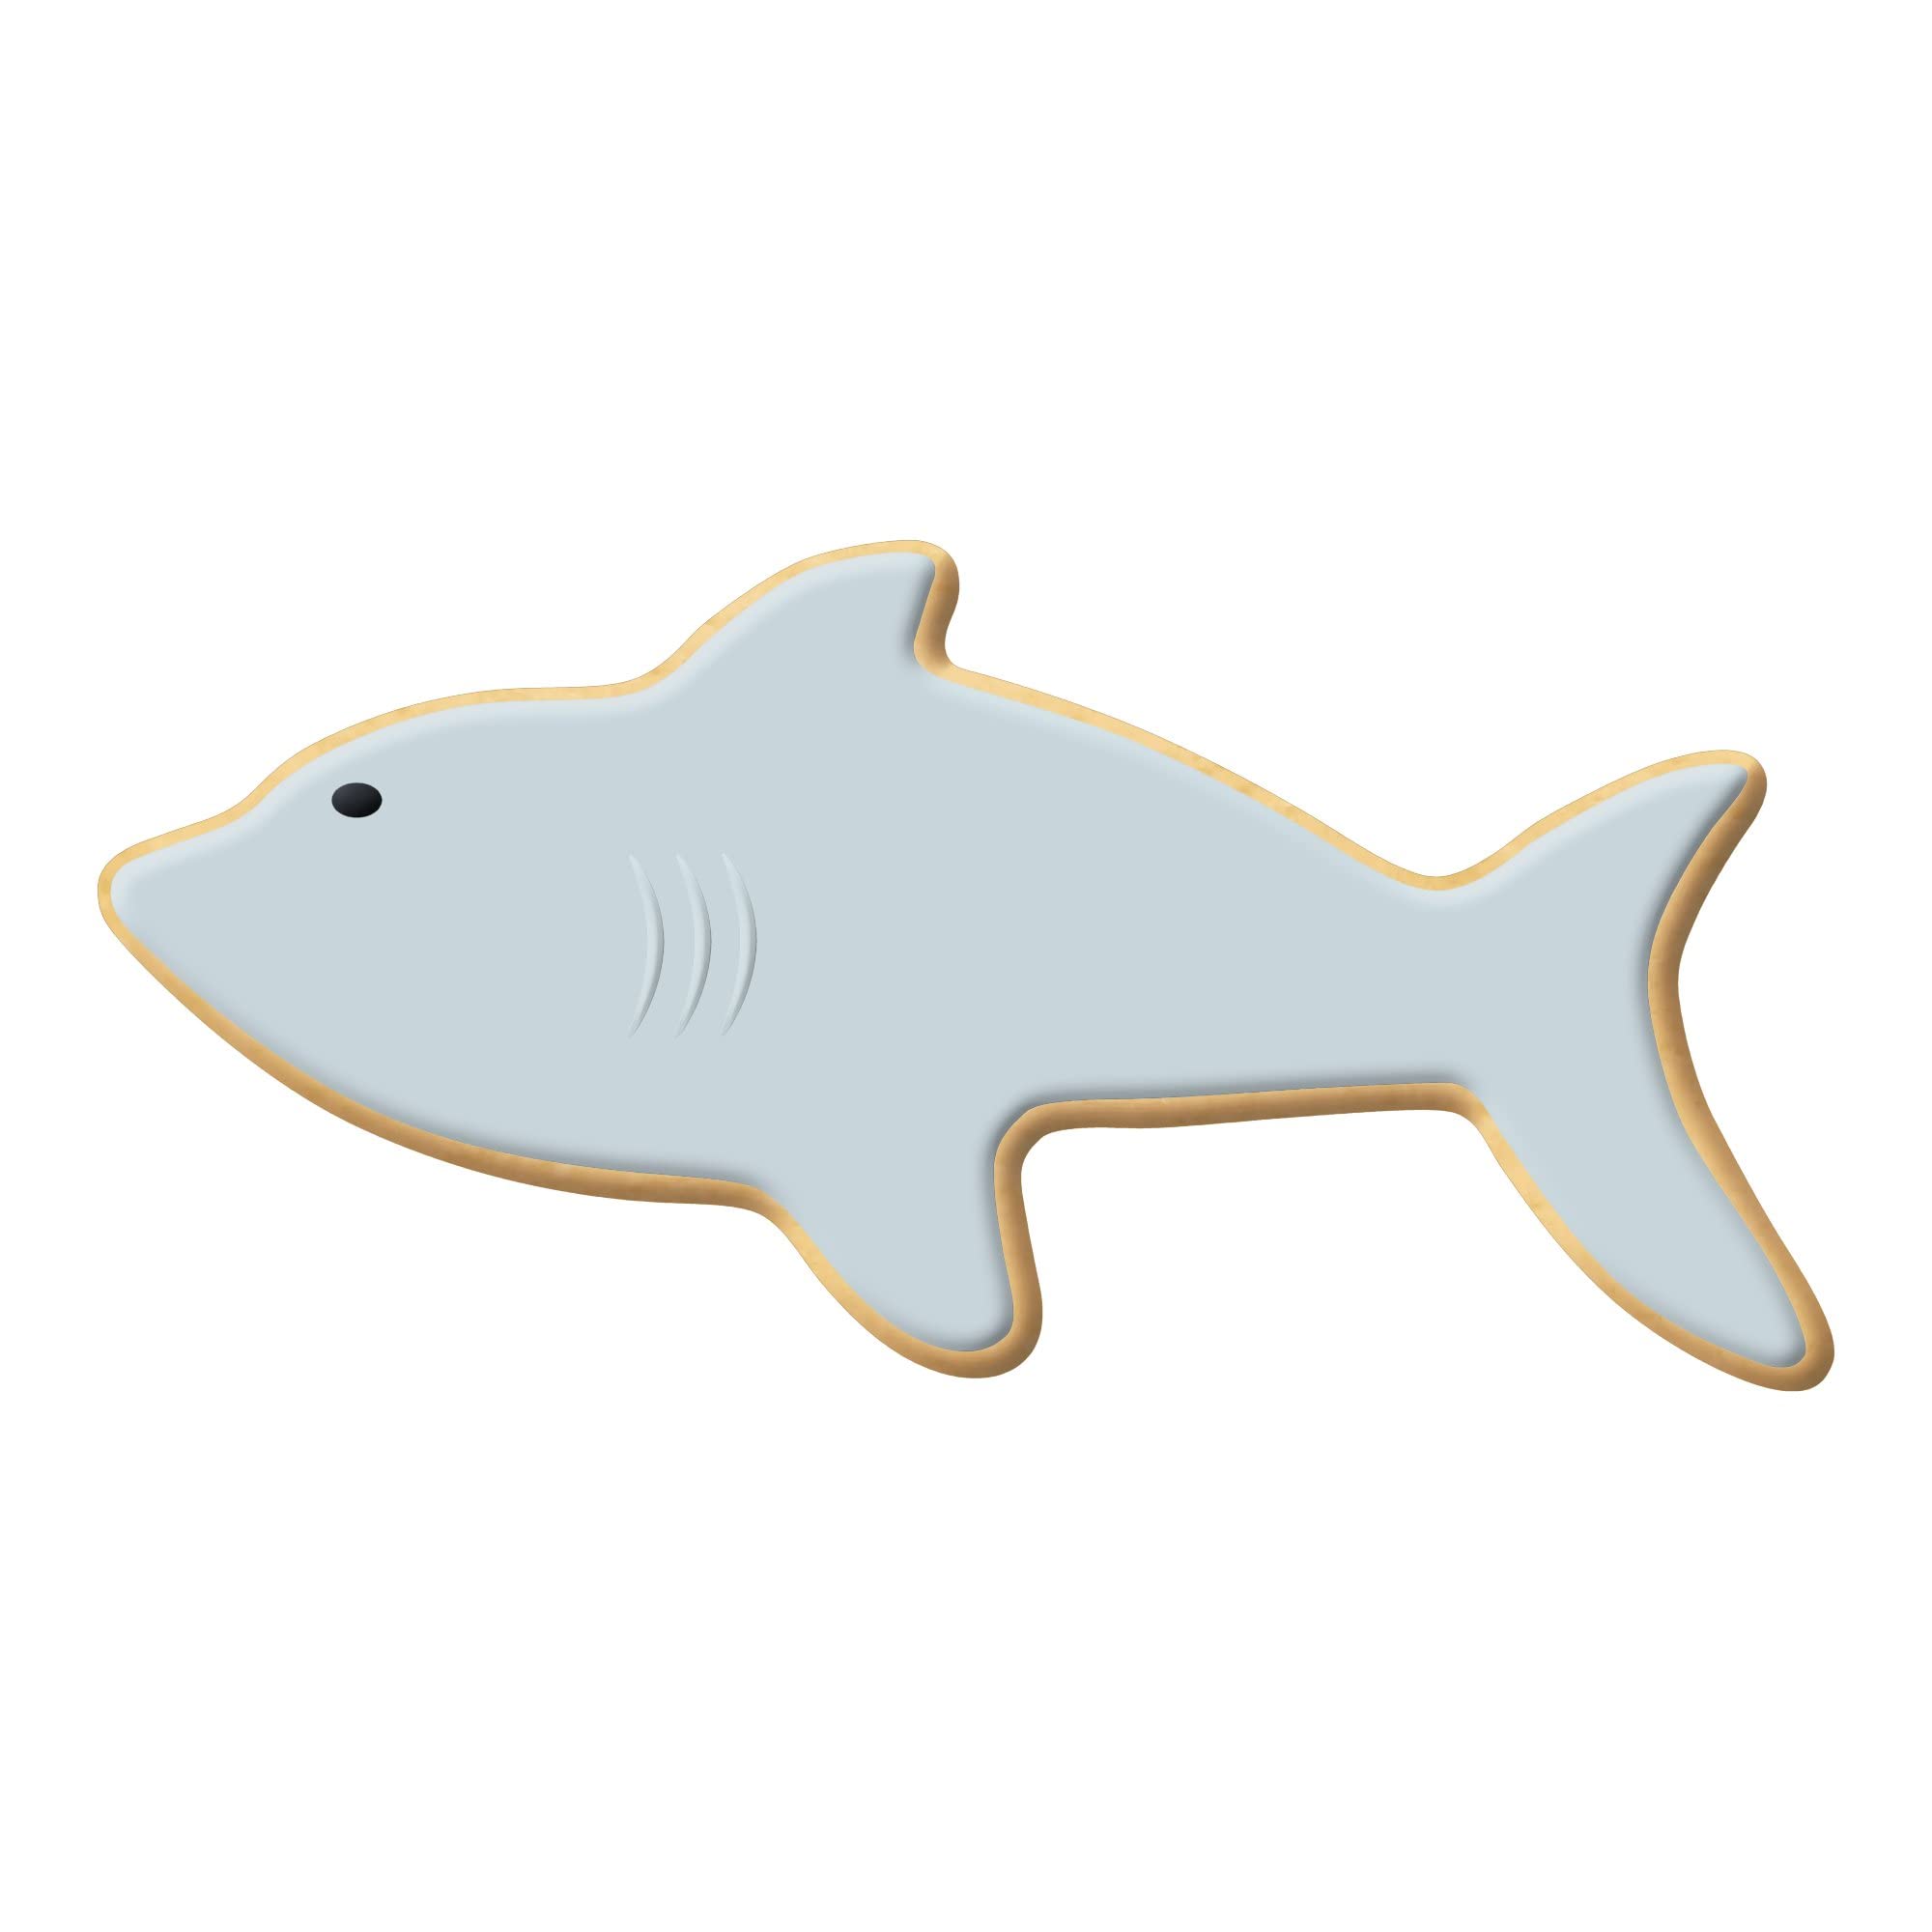 Foose Brand Shark Cookie Cutter 3.38 in, Tin Plate Steel, USA Made